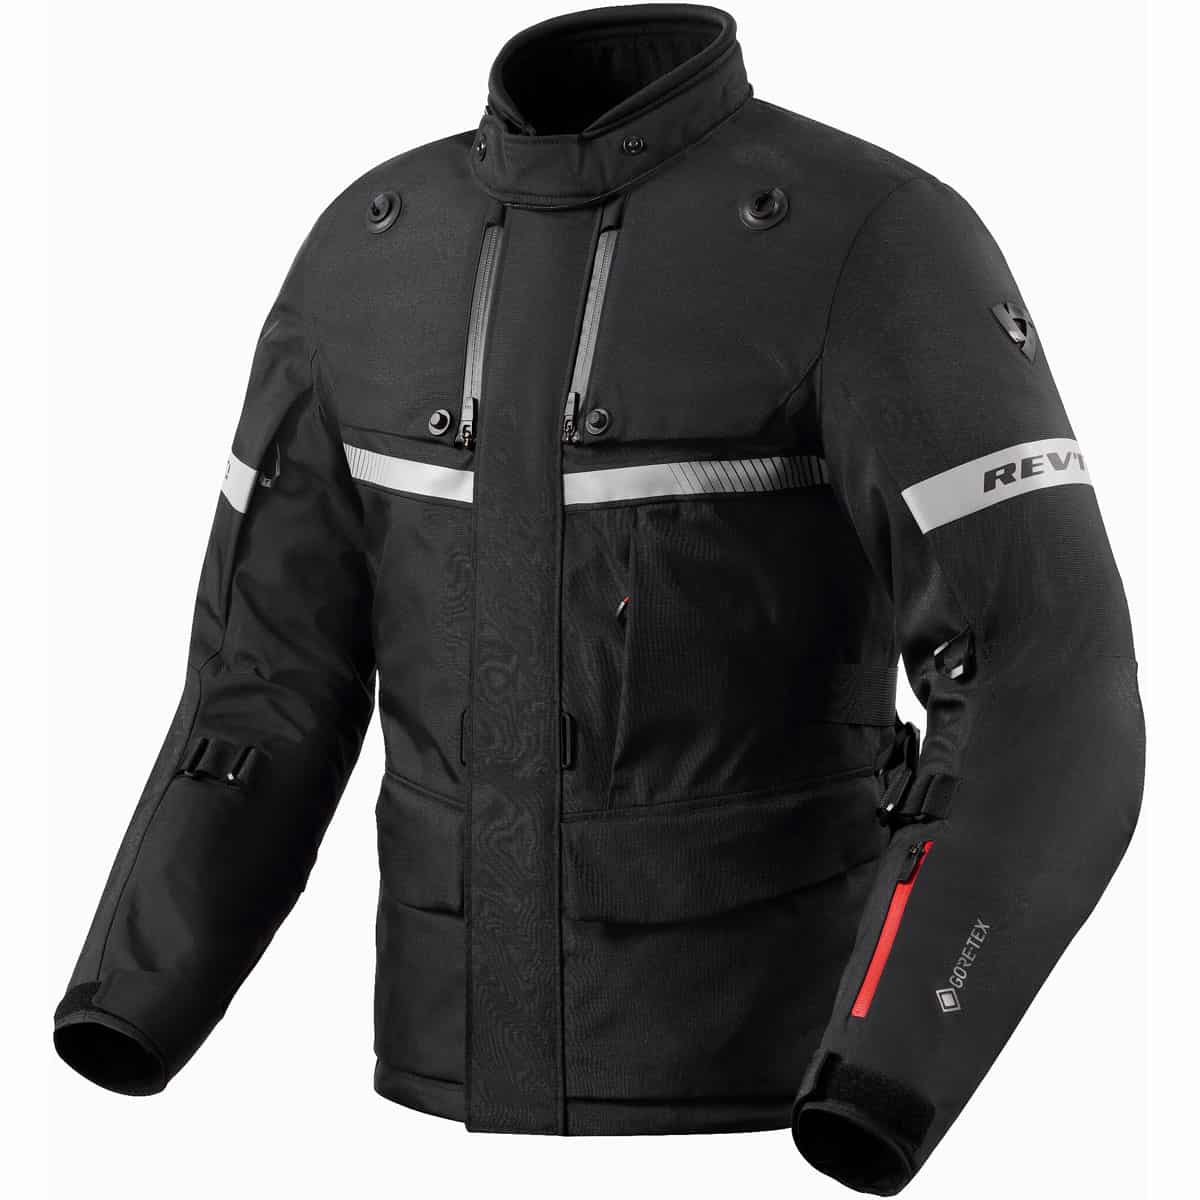 Rev It! Poseidon 3 GTX Jacket: AA-rated laminated Gore-Tex motorcycle touring jacket